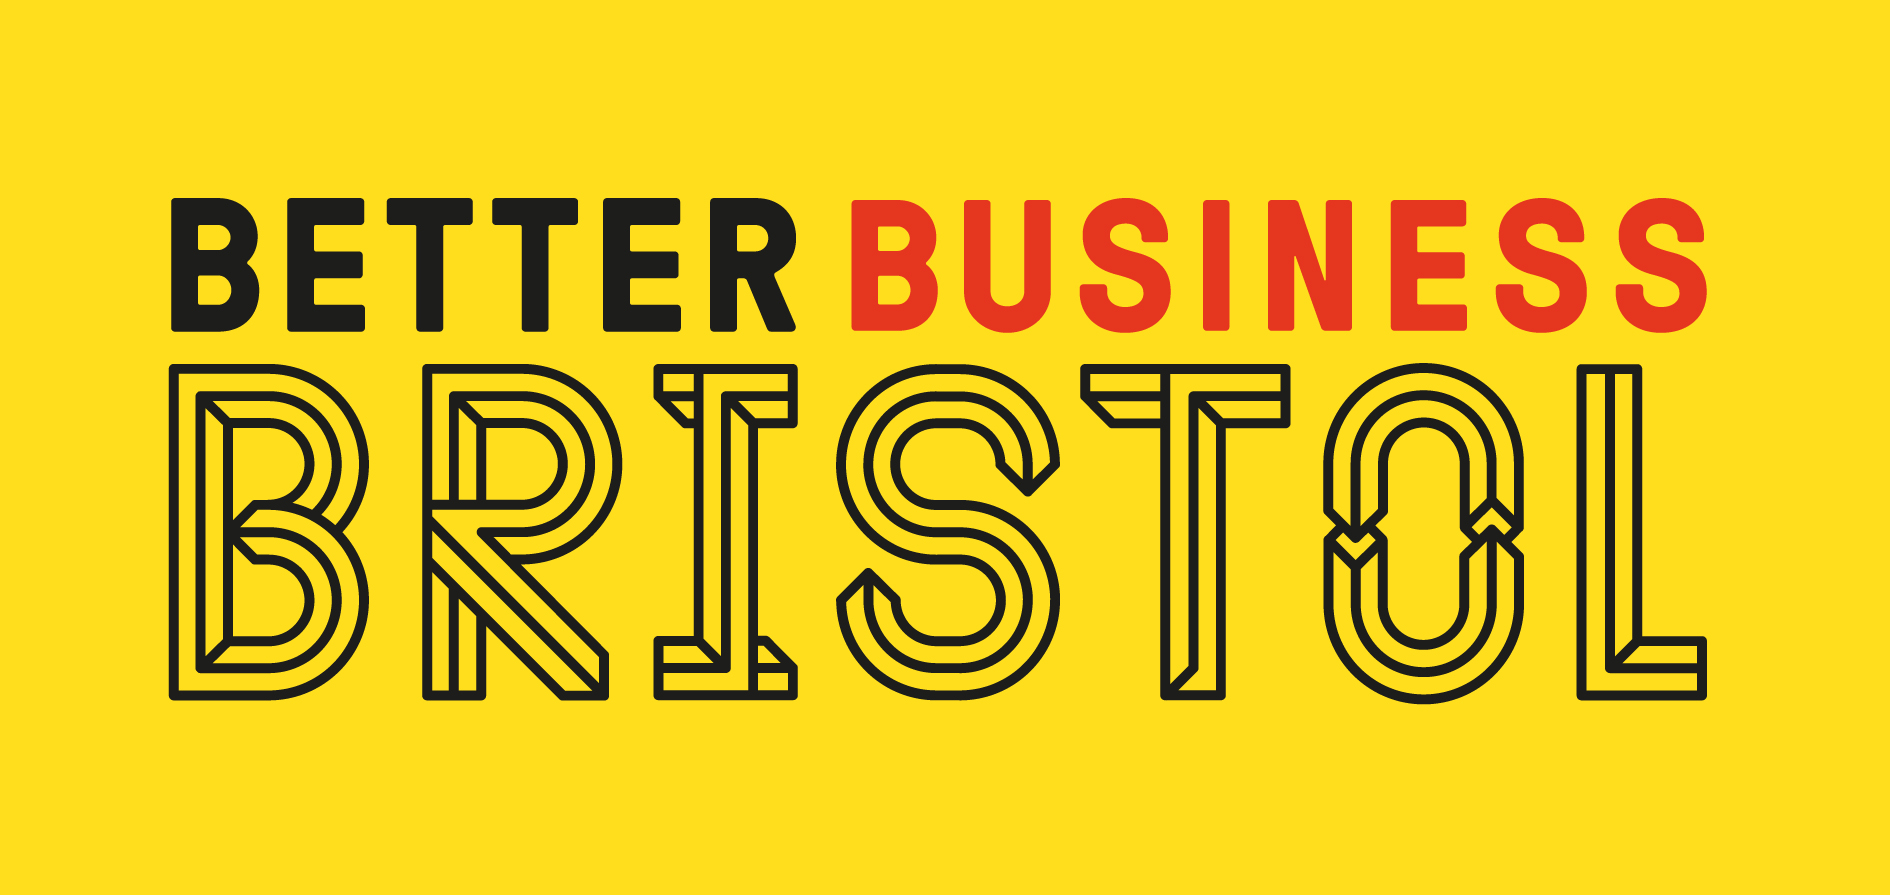 BetterBristolBusiness_logo